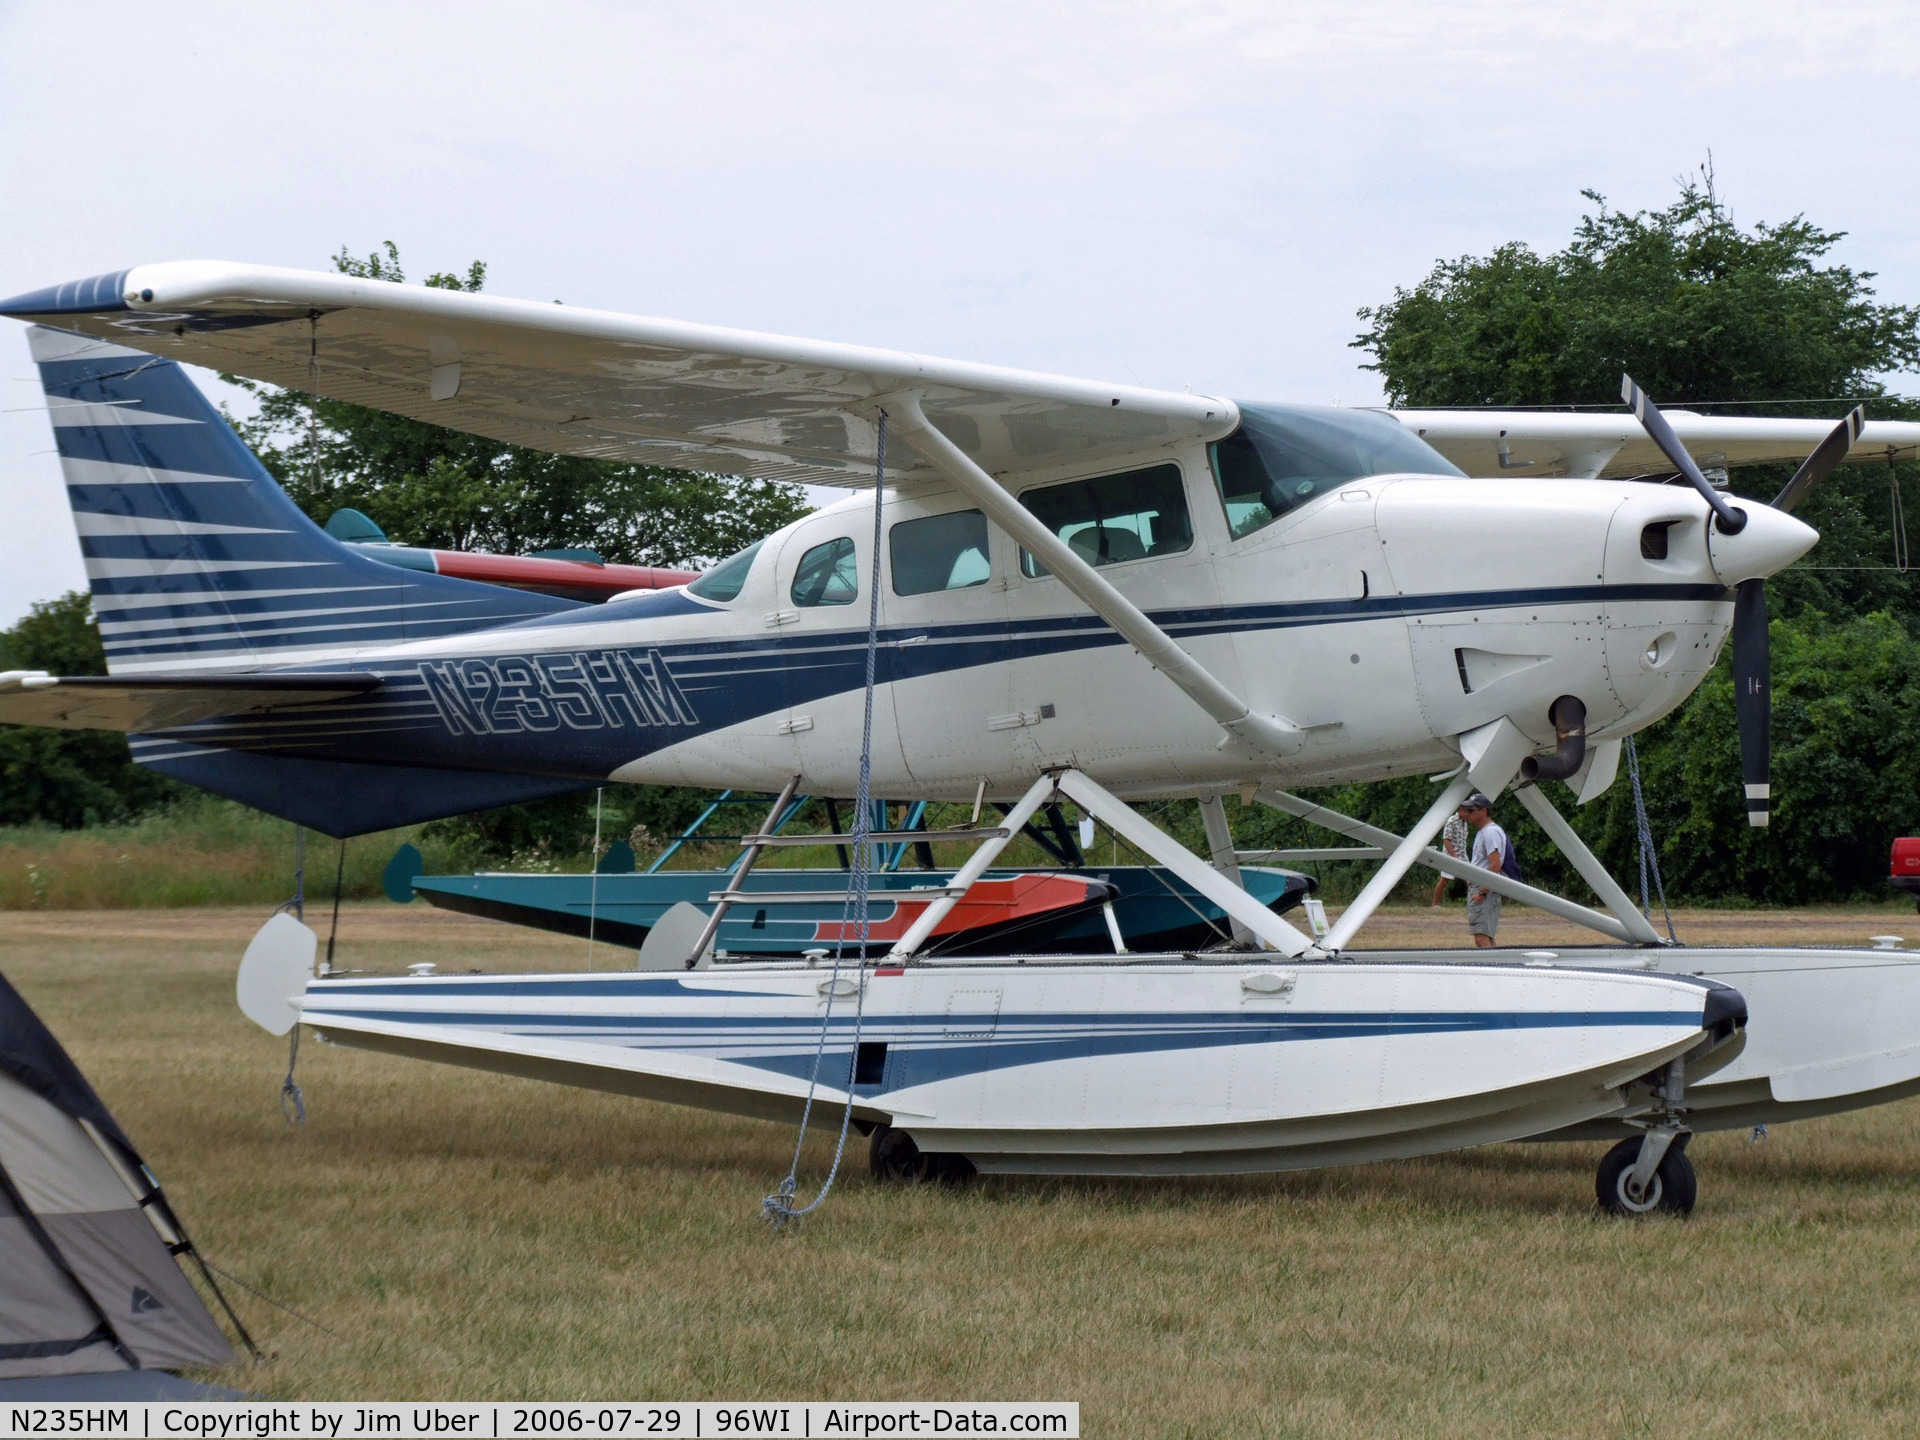 N235HM, 1984 Cessna TU206G Turbo Stationair C/N U20606795, Cessna 206 on floats in the north 40